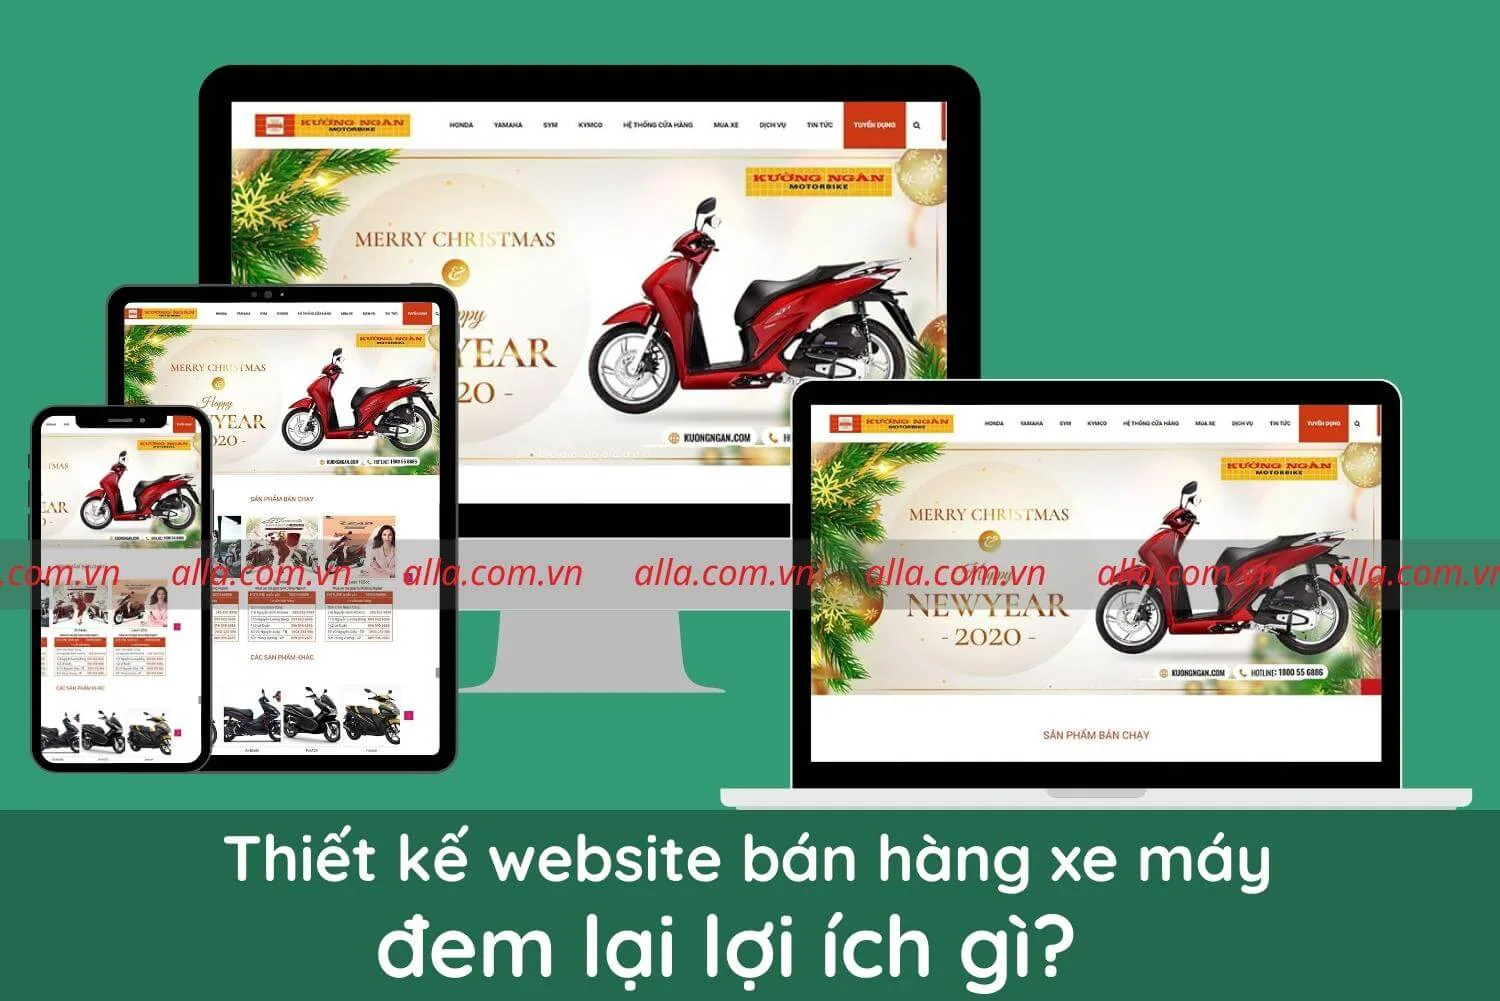 loi-ich-khi-thiet-ke-website-ban-hang-xe-may